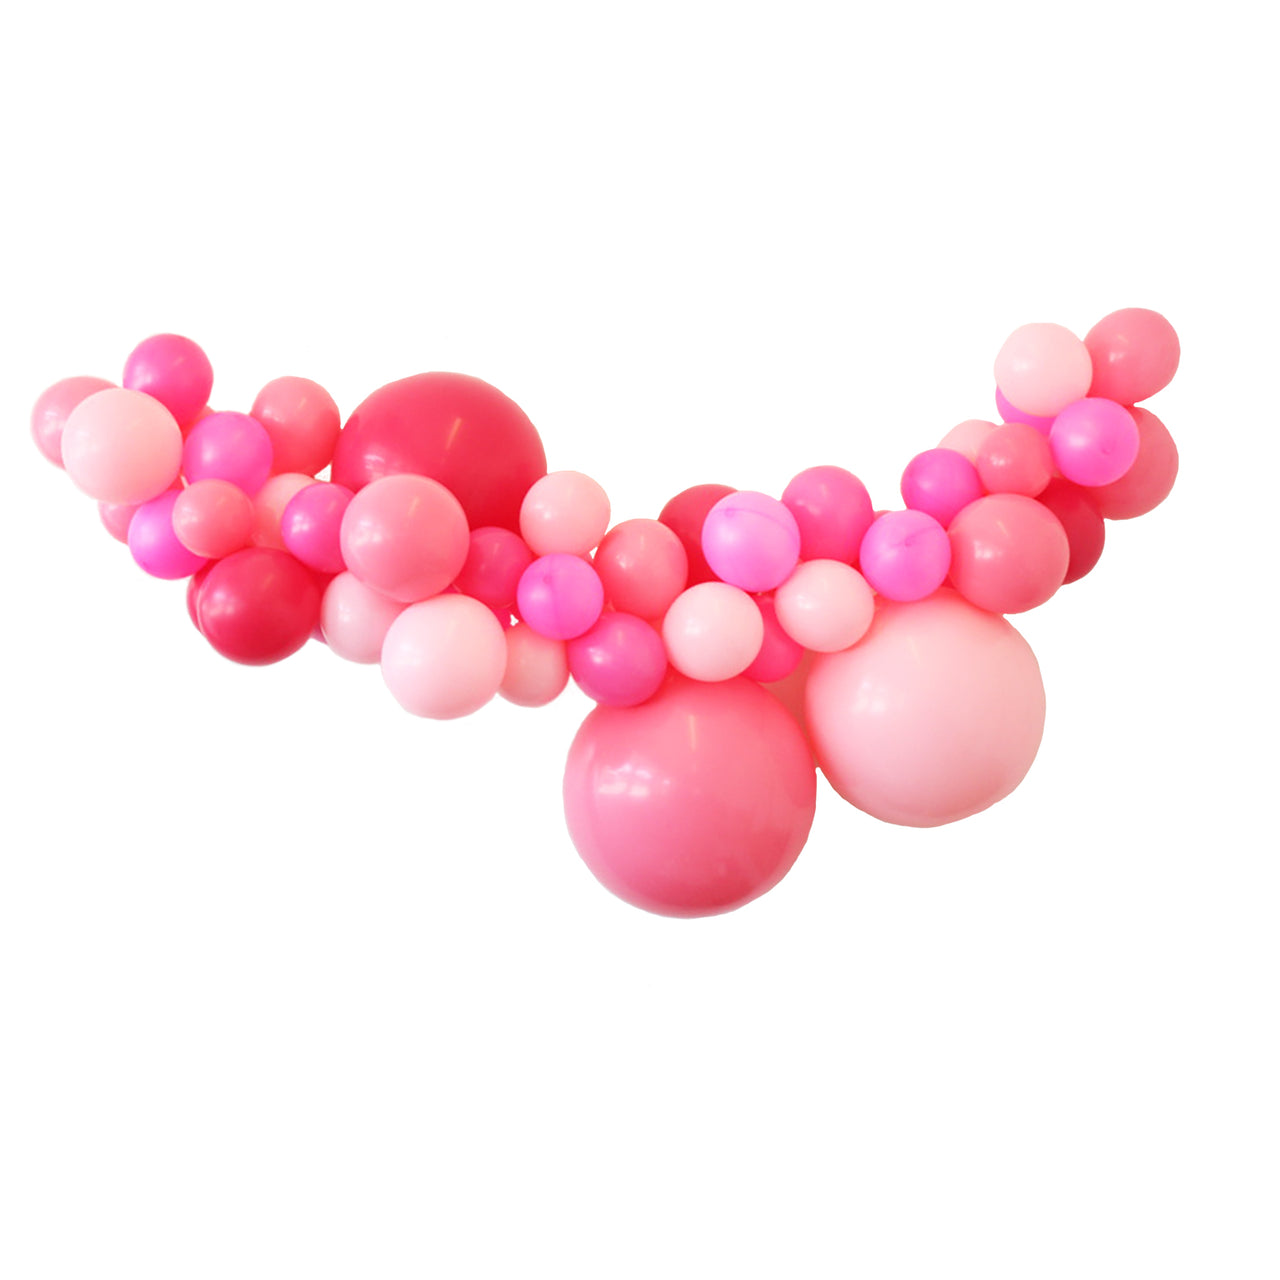 Perfectly Pink Jumbo Balloon Garland Kit